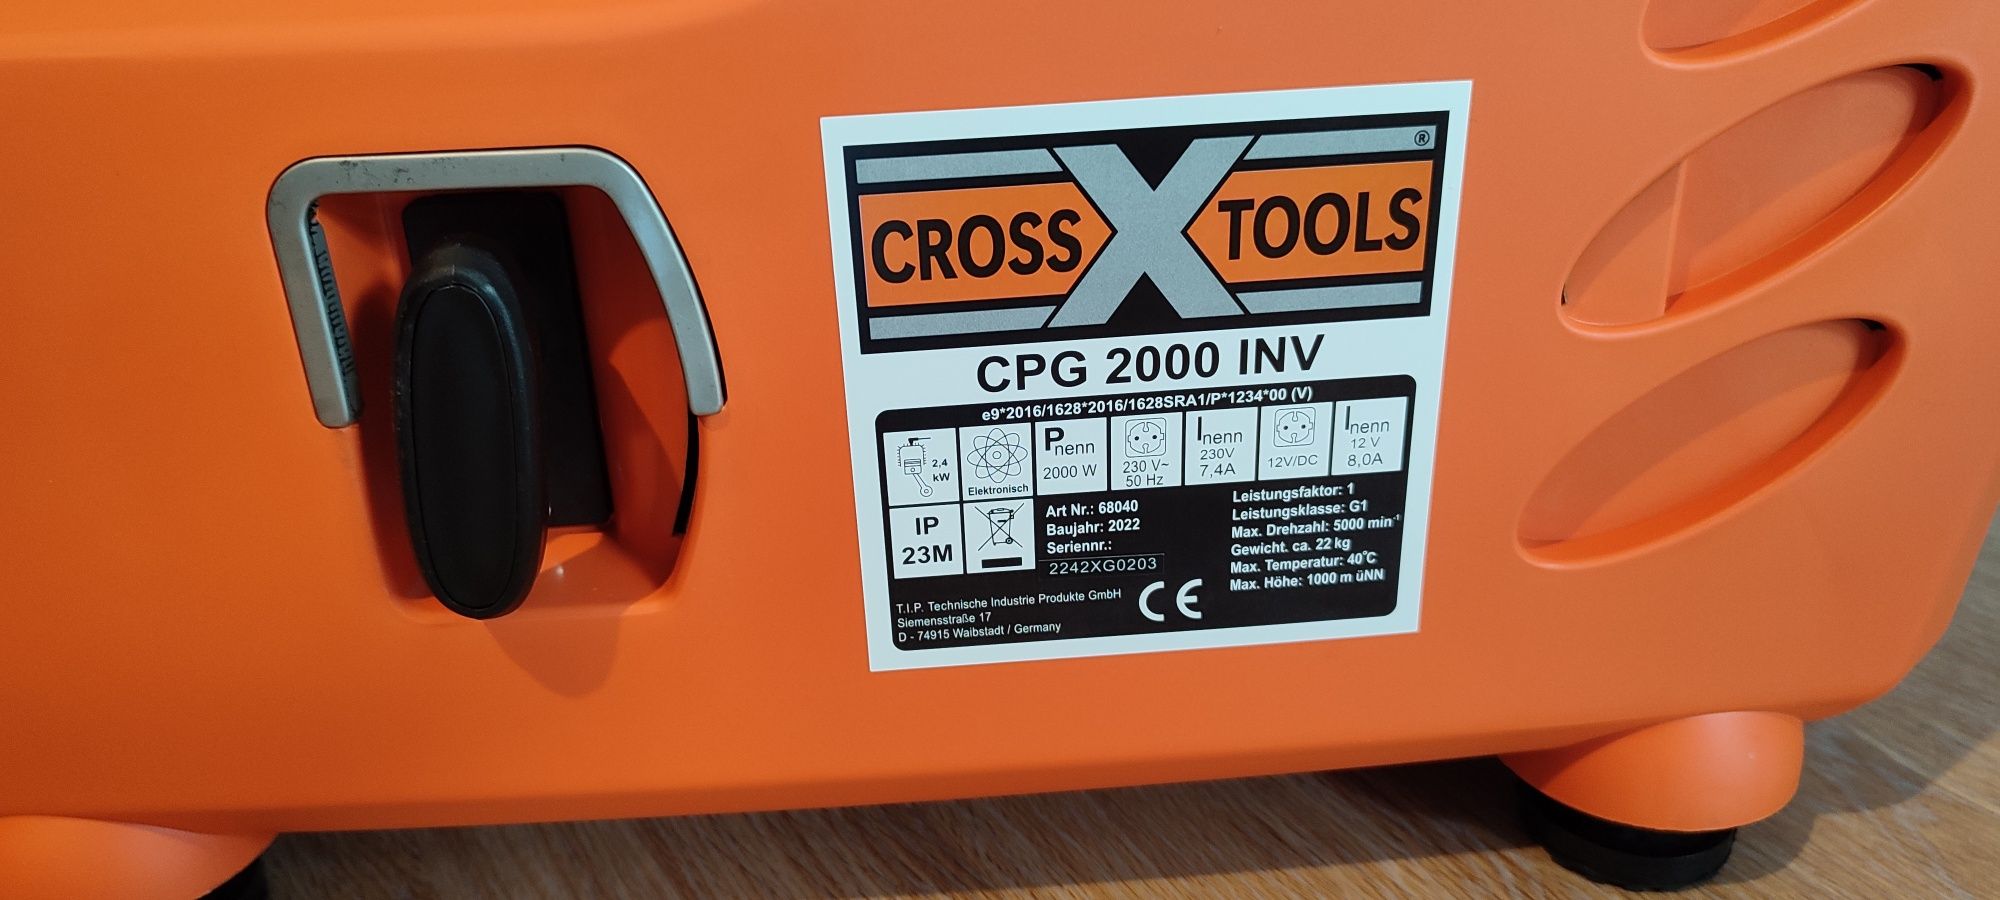 Електрогенератор Cross Tools CPG 2000 INV, Генератор + подарунок